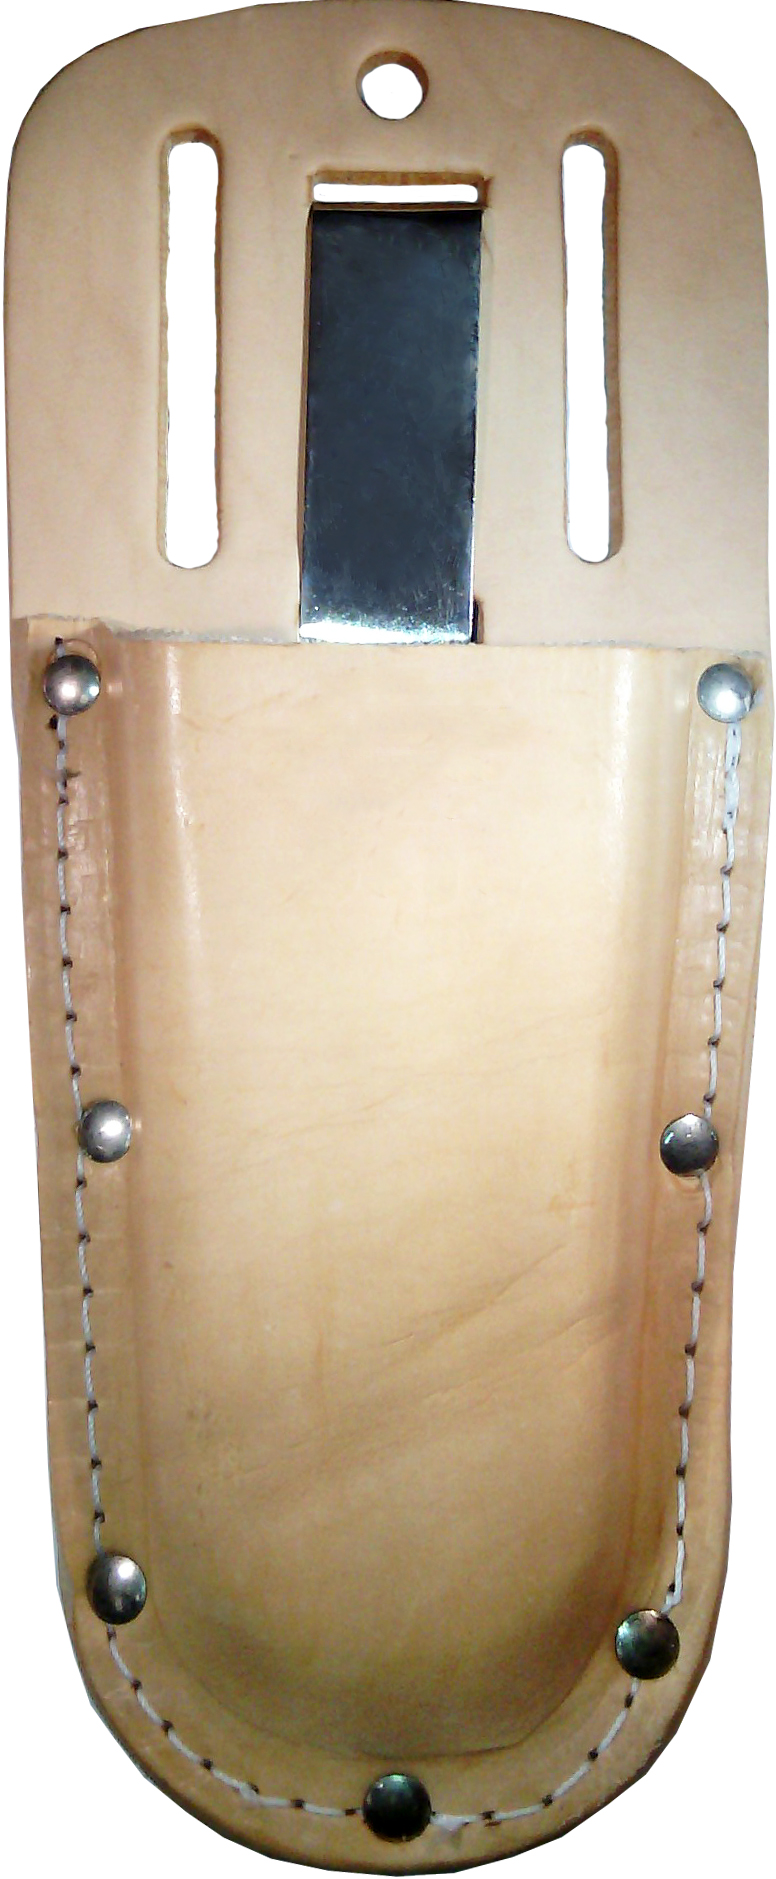 Zenport Holster HJ261 Leather Pruner Sheath, Belt Loop, Metal Clip, for Pruners and Folding Saws